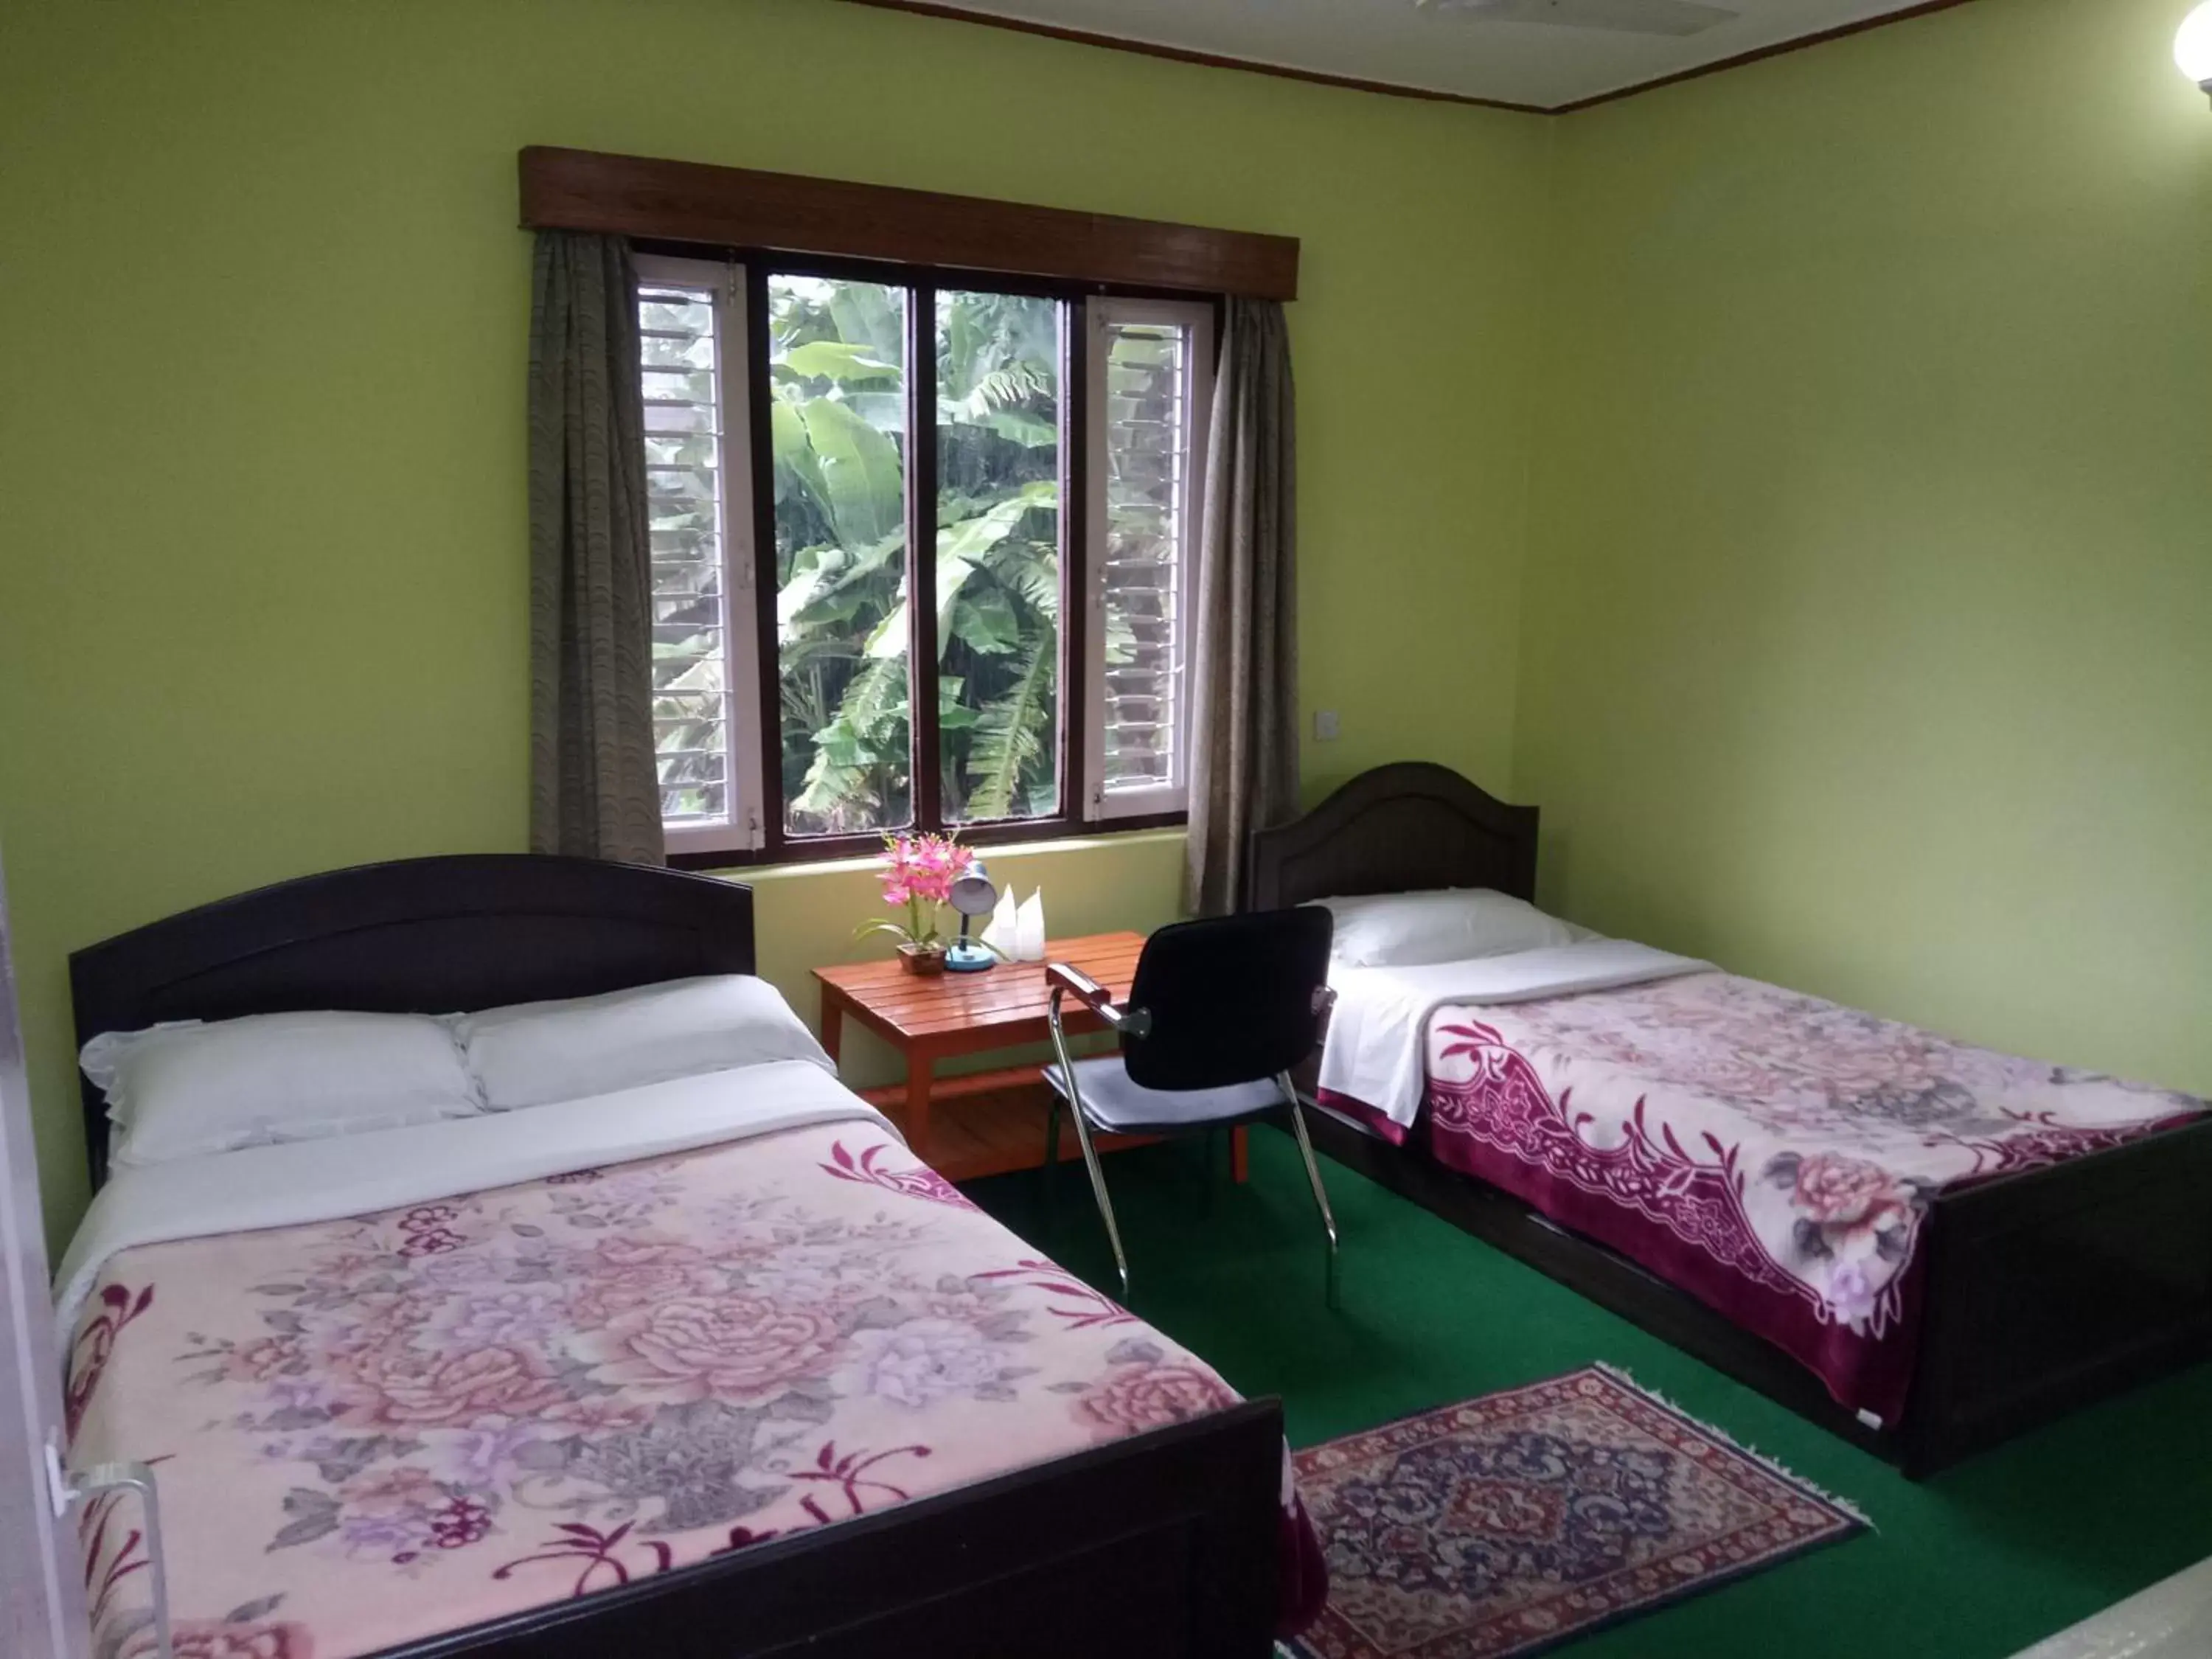 Bed in New Pokhara Lodge - Lakeside, Pokhara Nepal